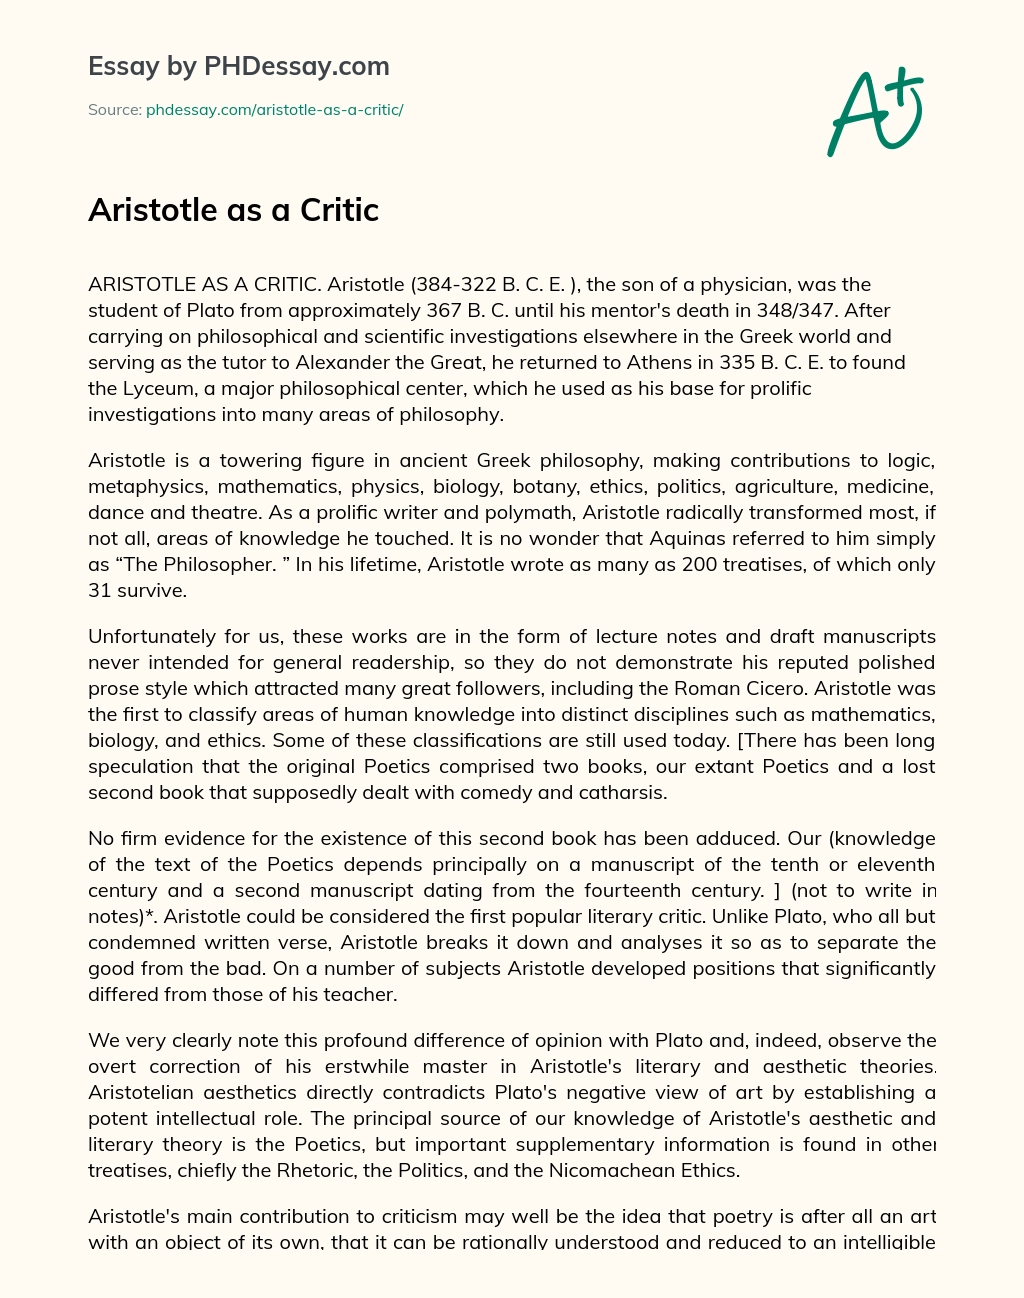 Aristotle as a Critic essay